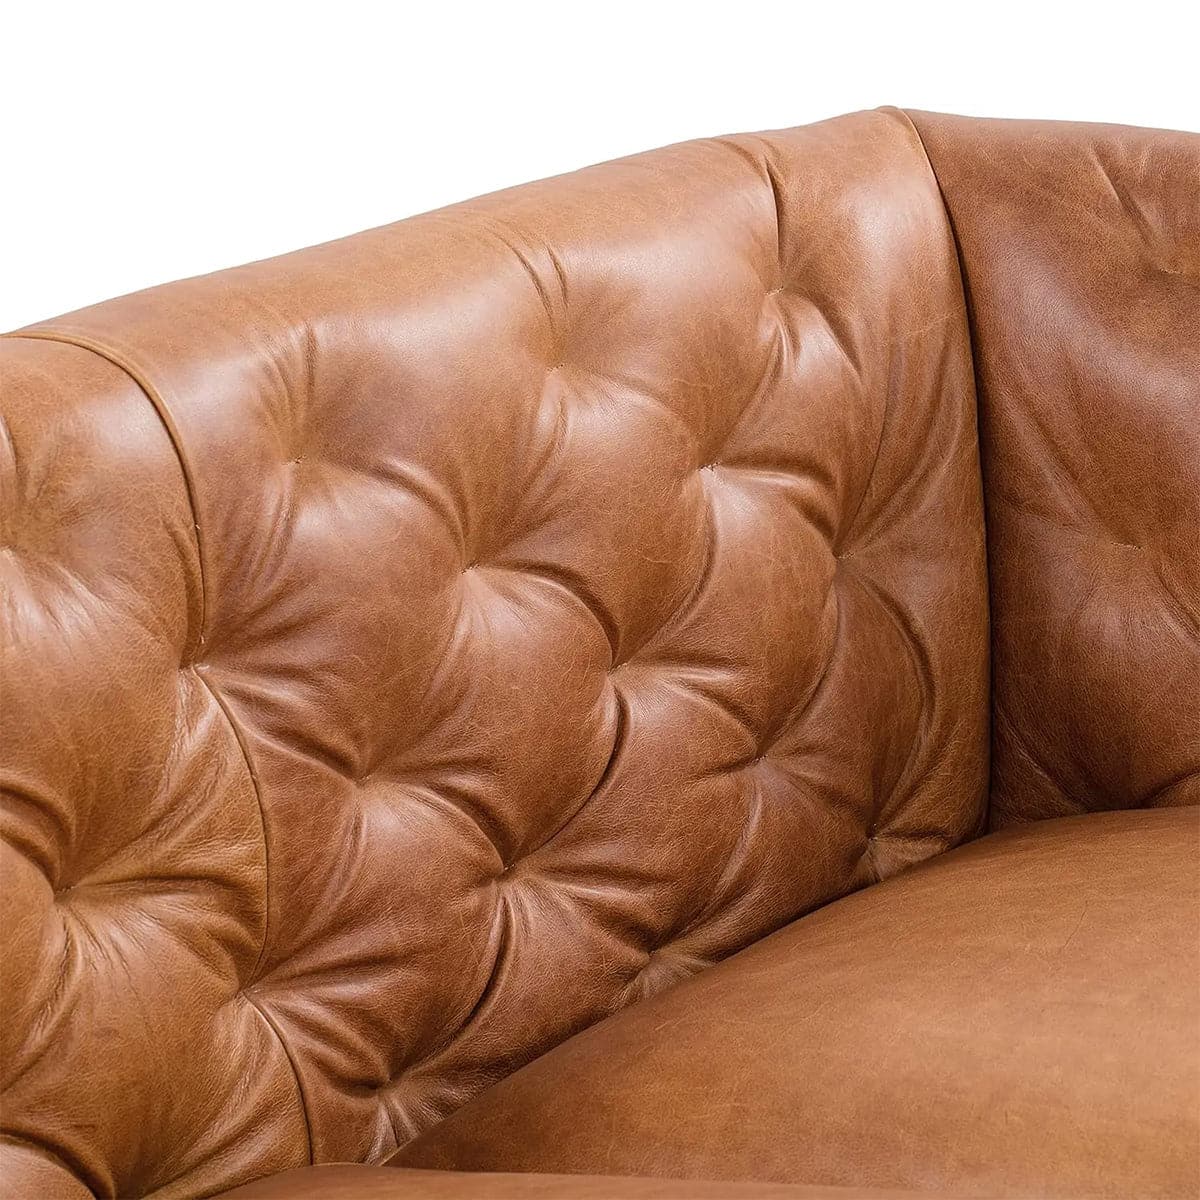 Archer 89" Leather Sofa